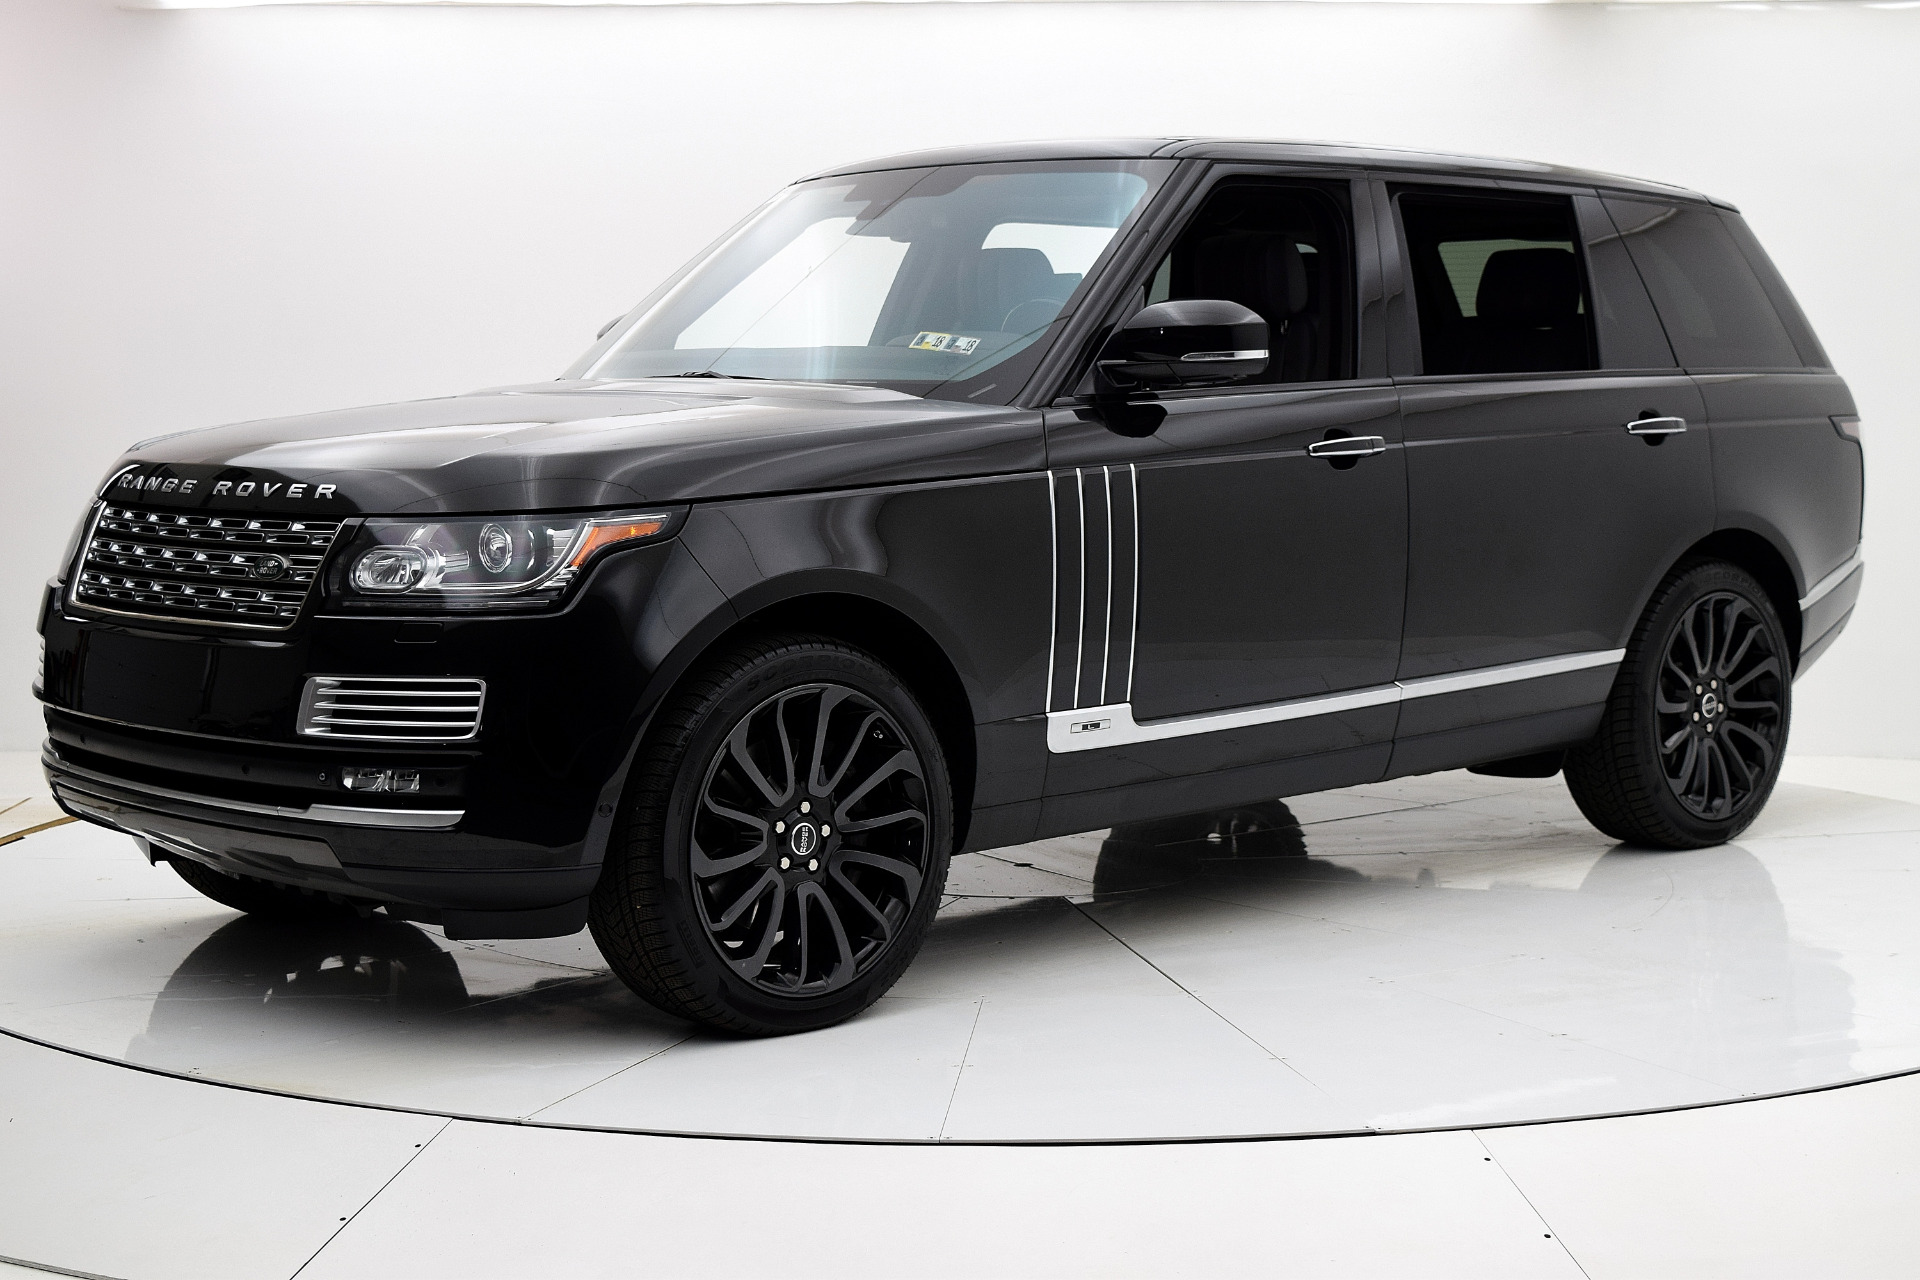 2015 range rover ebony edition for sale